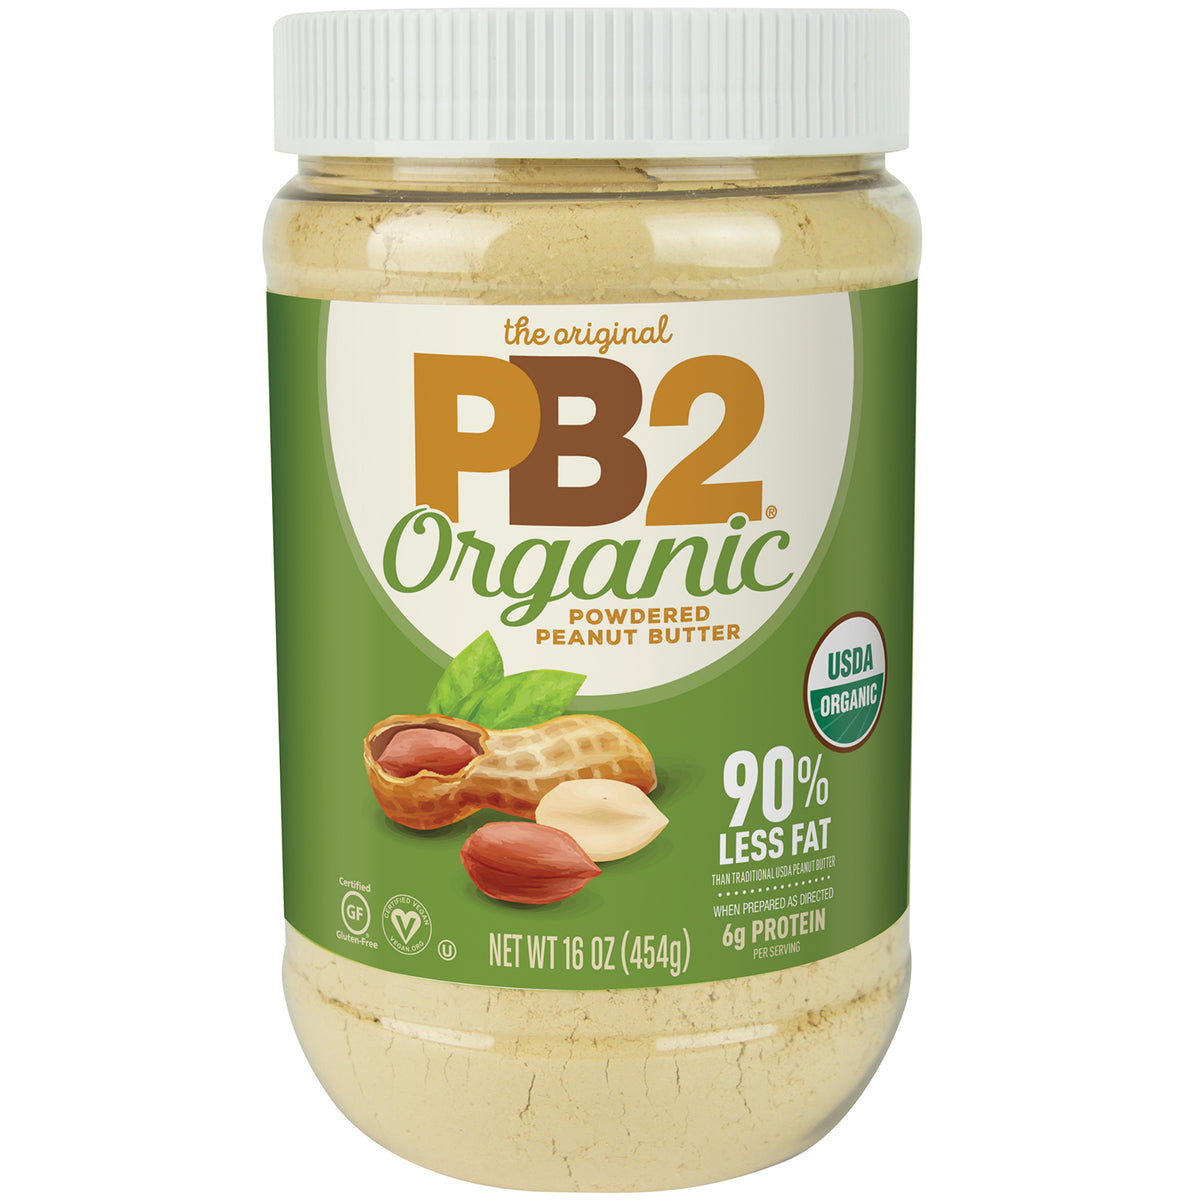 PB2 Foods 